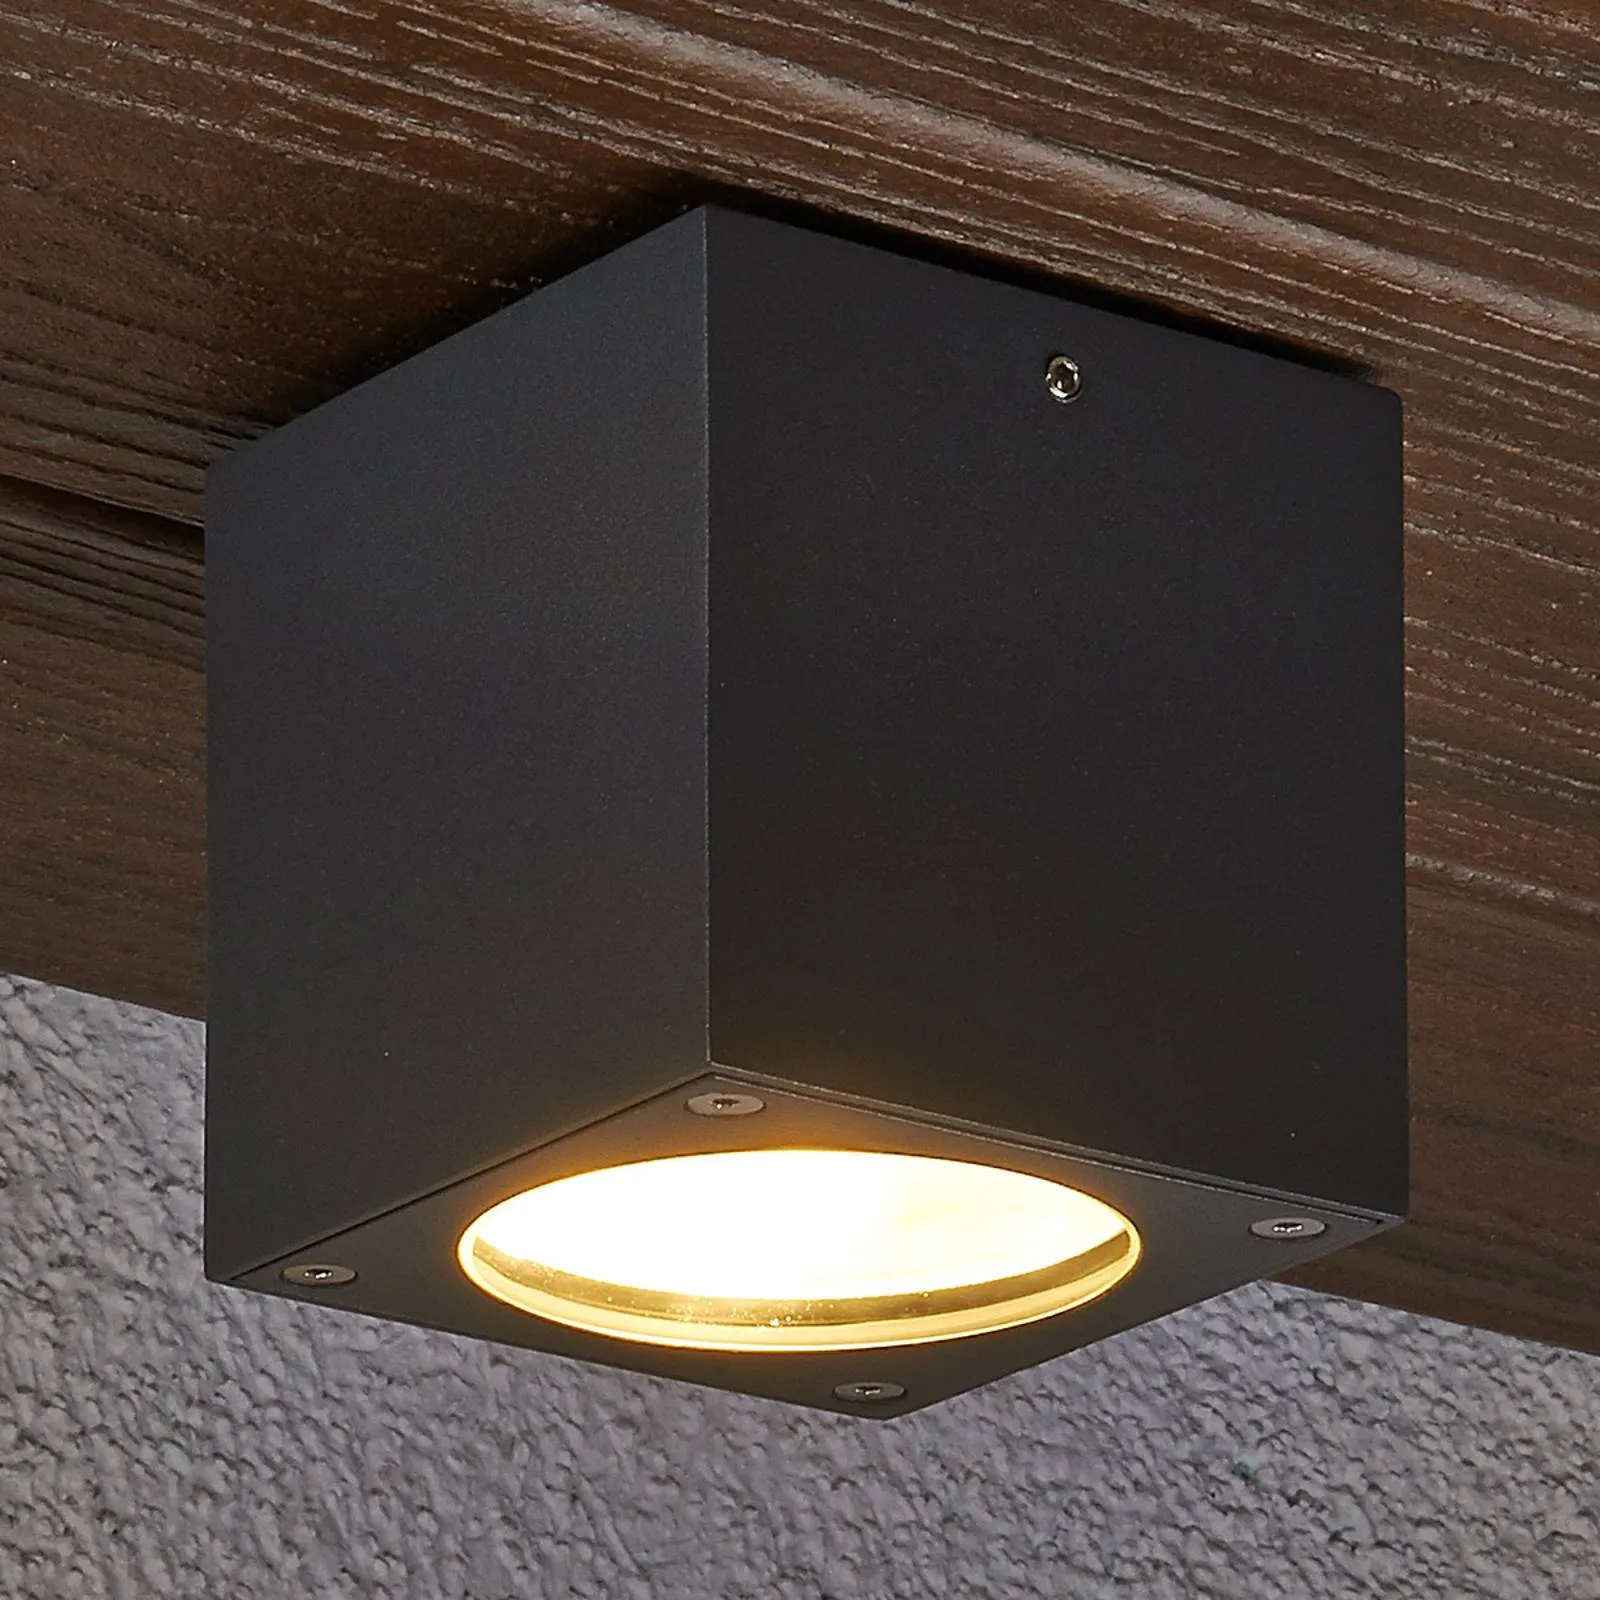 Angular LED ceiling light Meret for outdoors